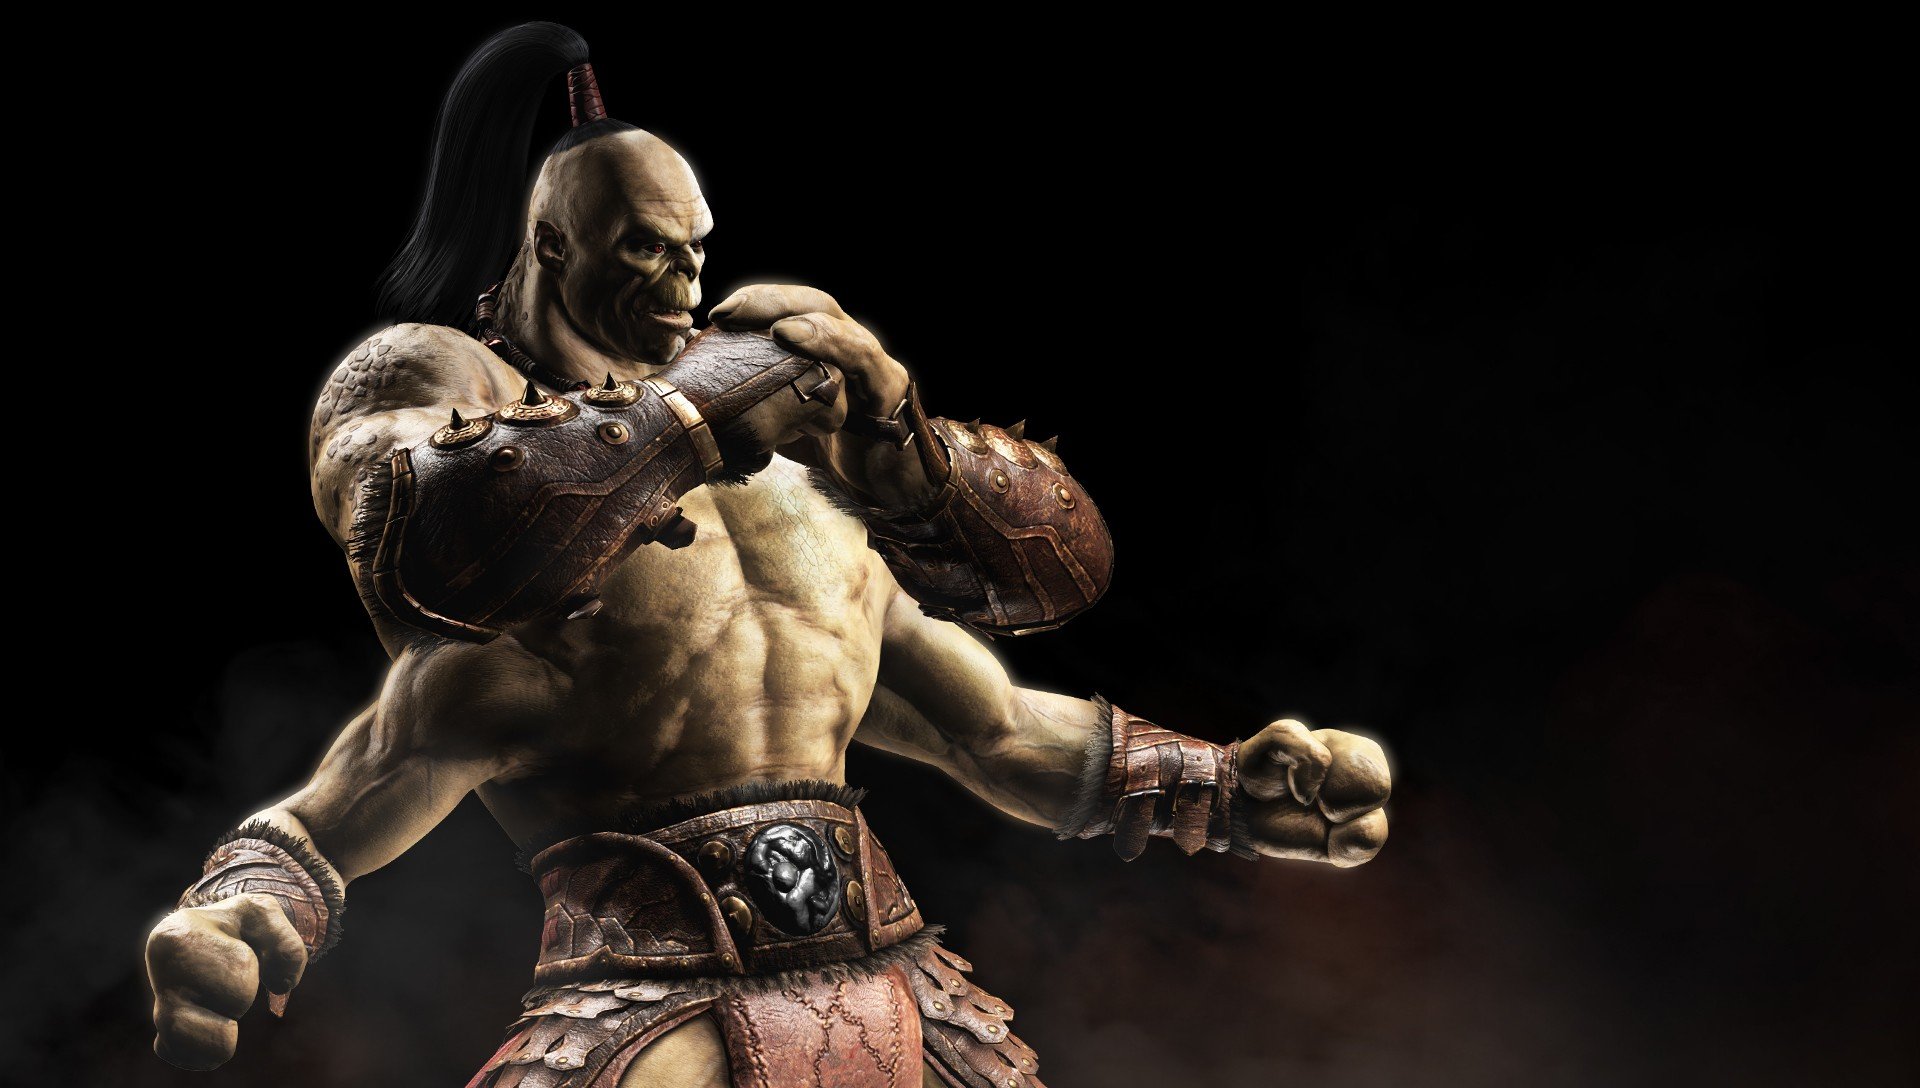 Mortal Kombat X, Goro, PC gaming, Four Arms Wallpaper